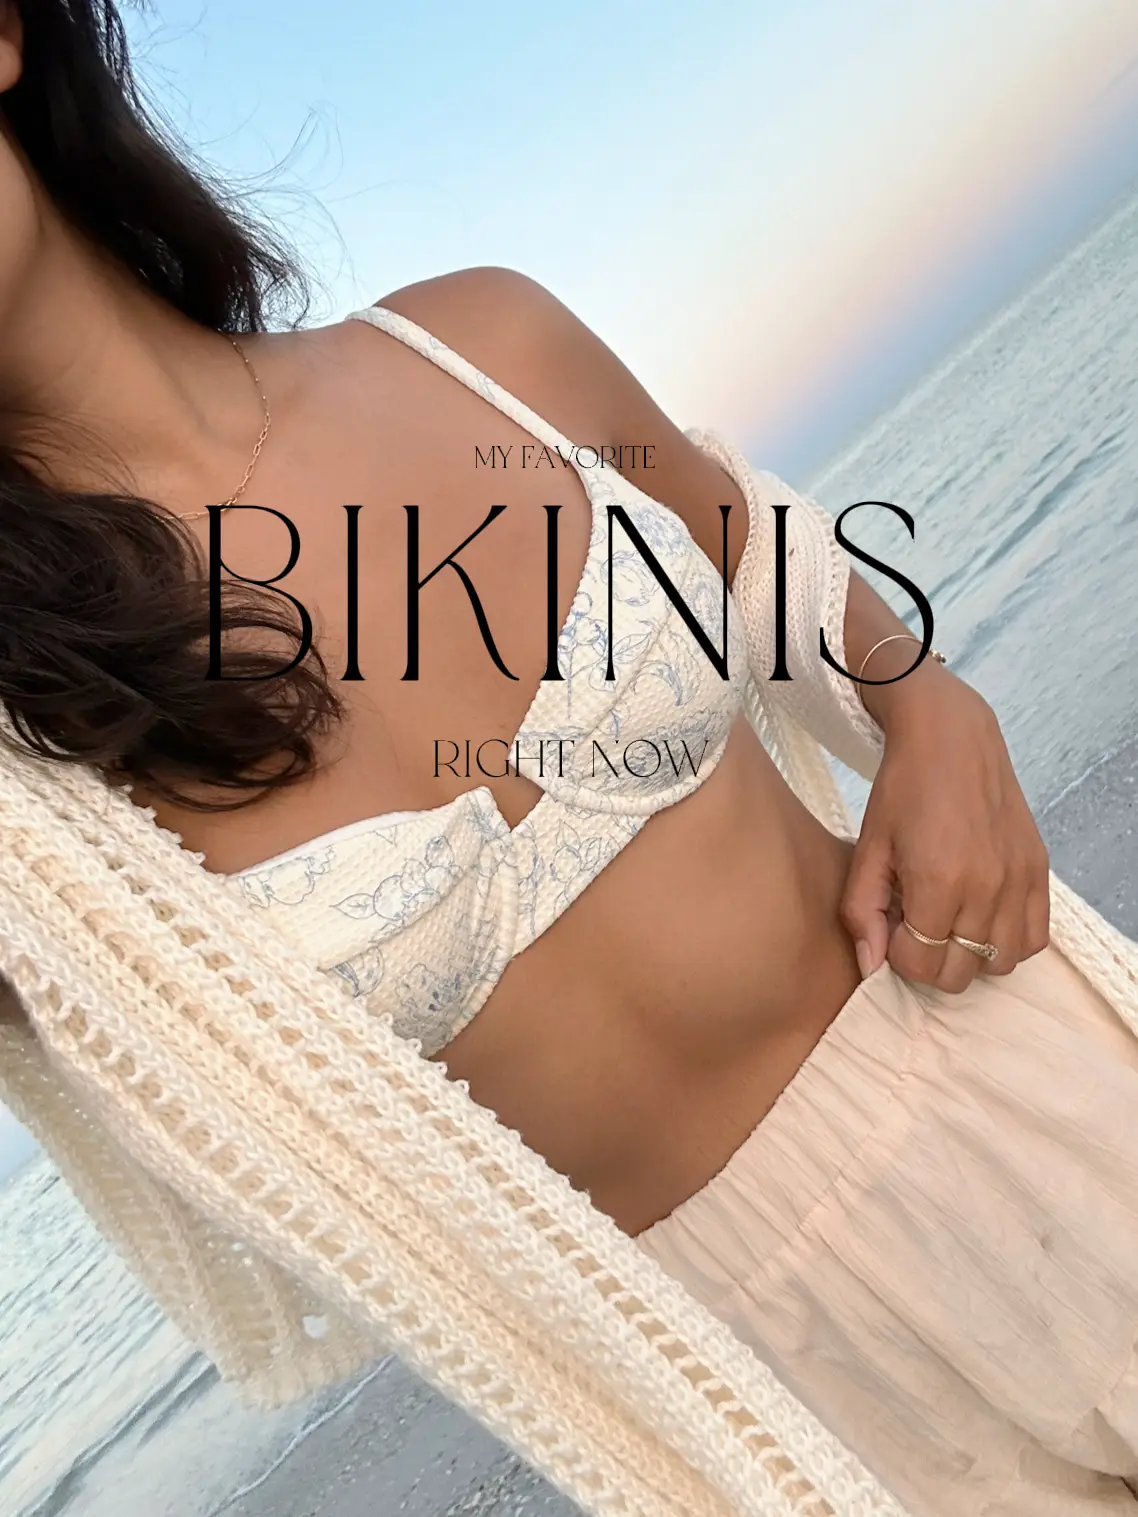 Favorite bikinis